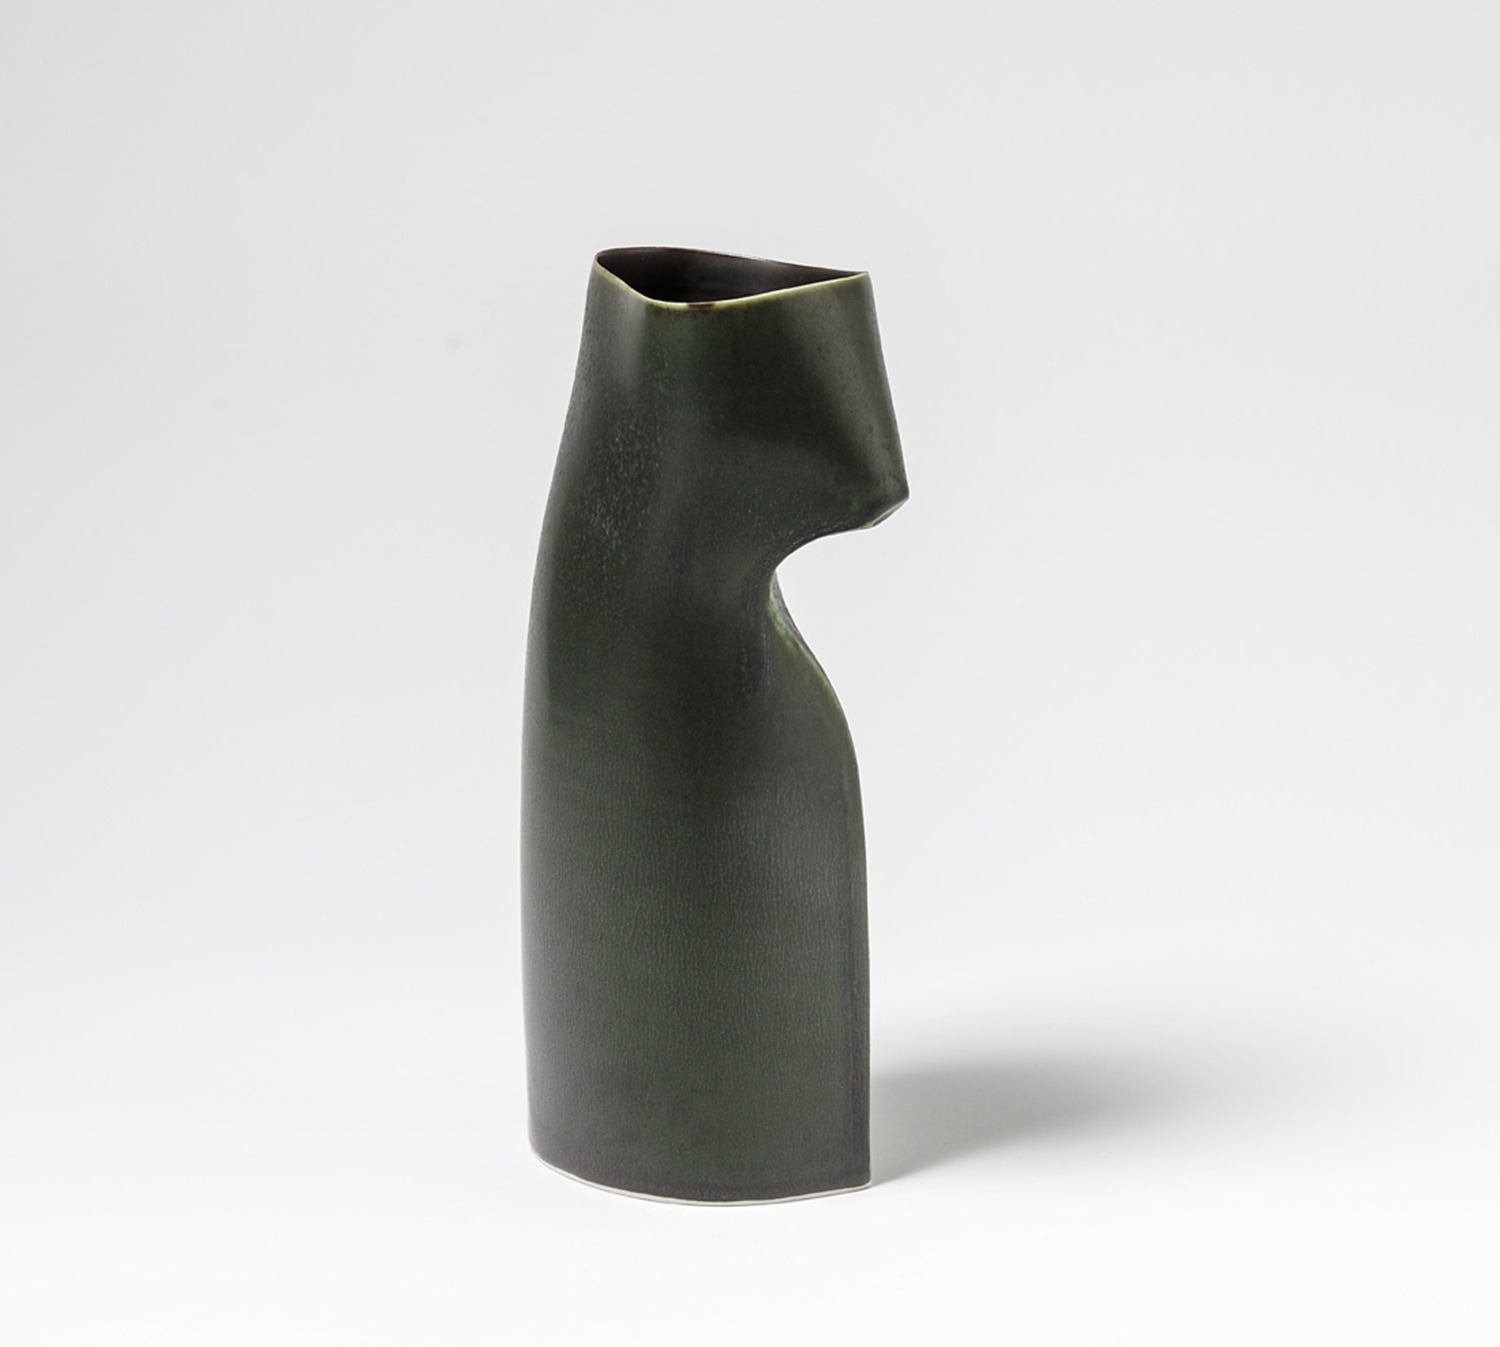 Sara Flynn - Sara Flynn exhbition in France - Galerie de l'Ancienne Poste - French ceramic gallery - Irish ceramics